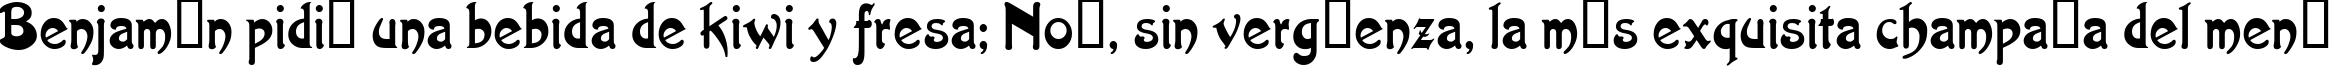 Пример написания шрифтом Artist-Nouveau текста на испанском